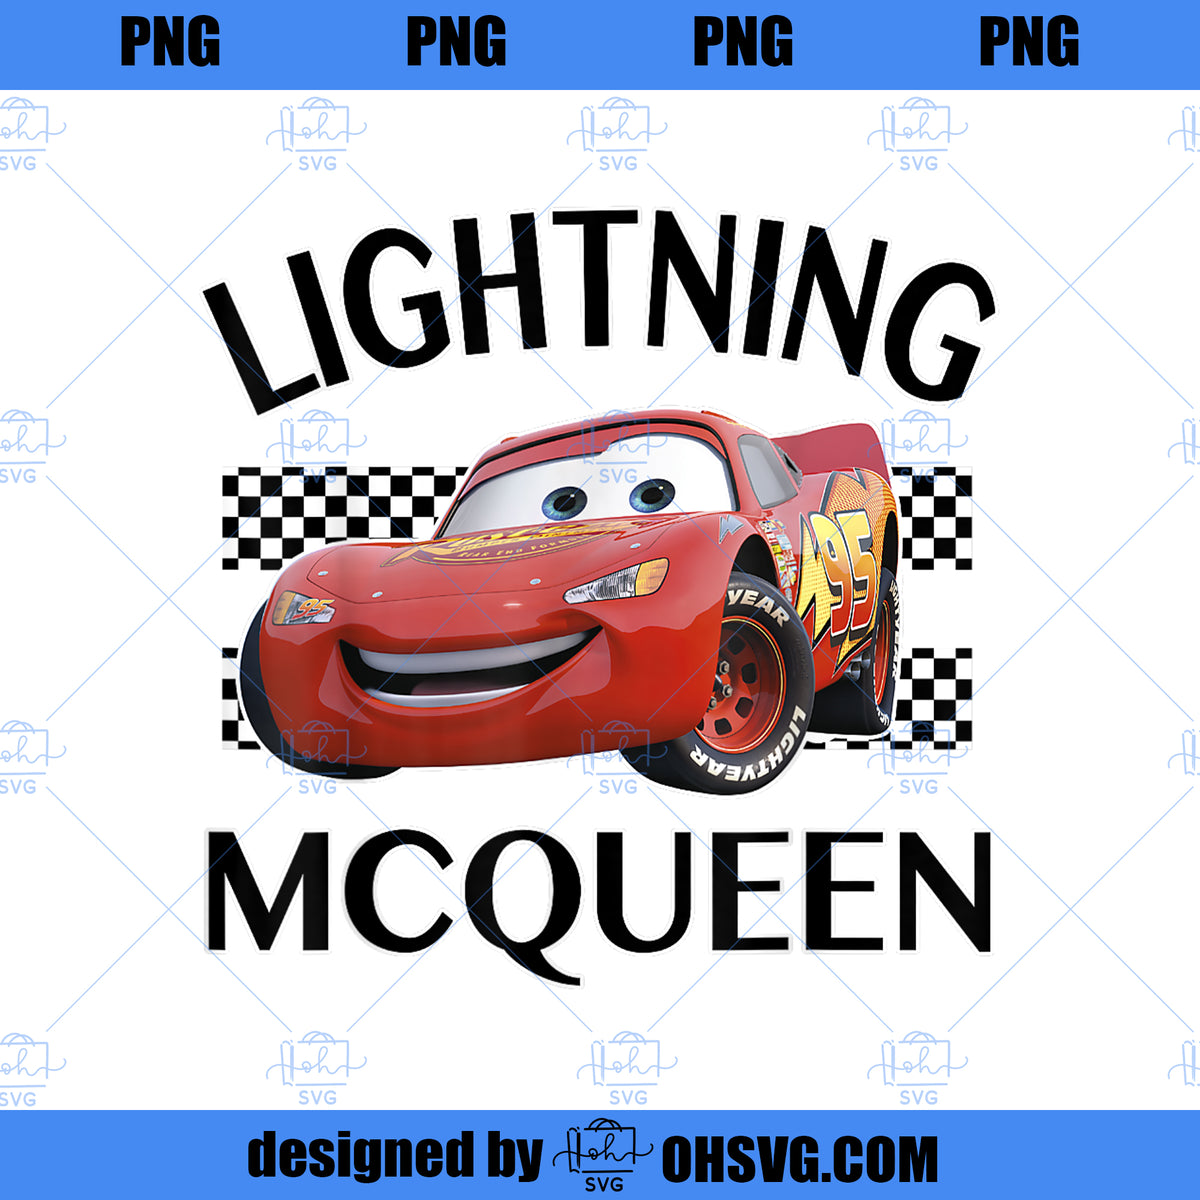 Disney Pixar Cars Lightning McQueen Finish Graphic PNG, Disney PNG, Pi ...